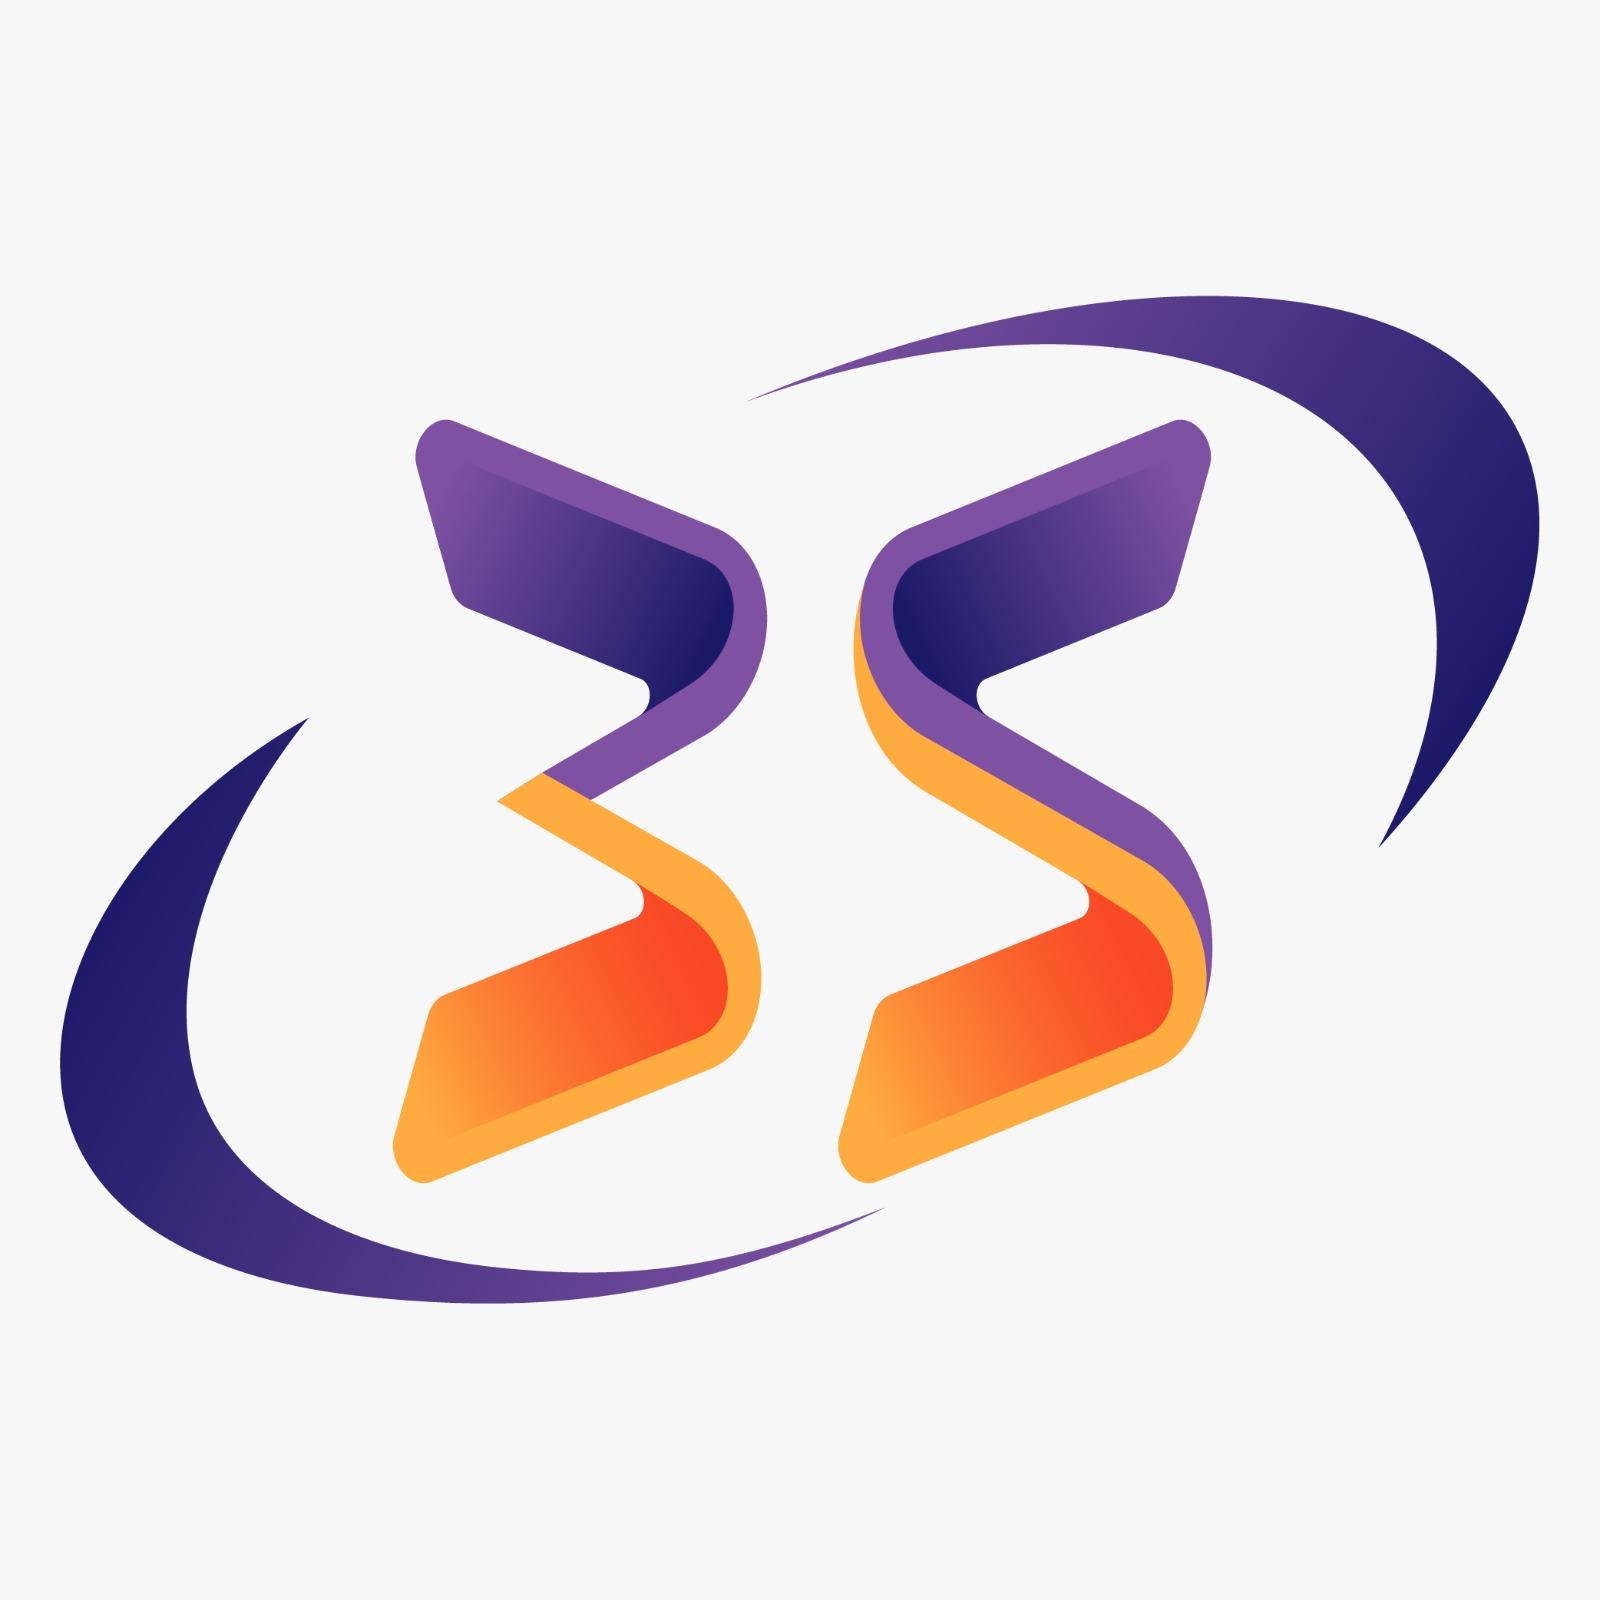 3S by Chanchal Associates Logo